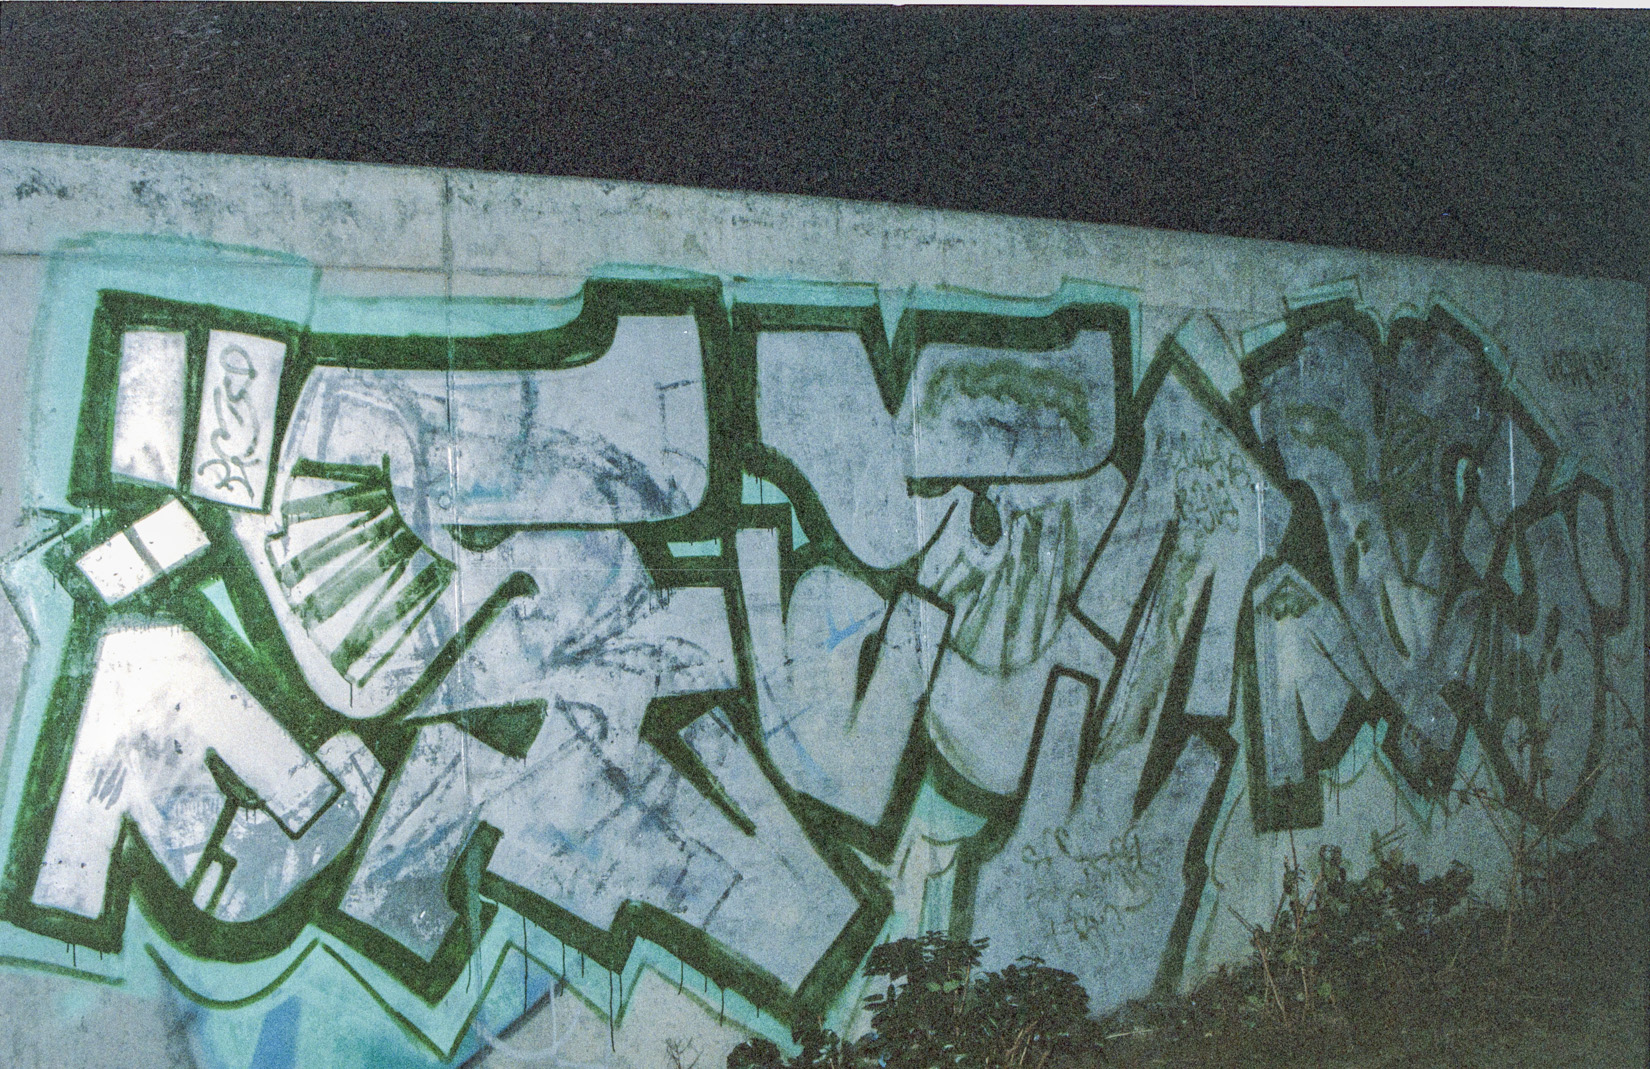 Frankfurt_Graffiti_1988_1989_H88_FRC (24 von 25)